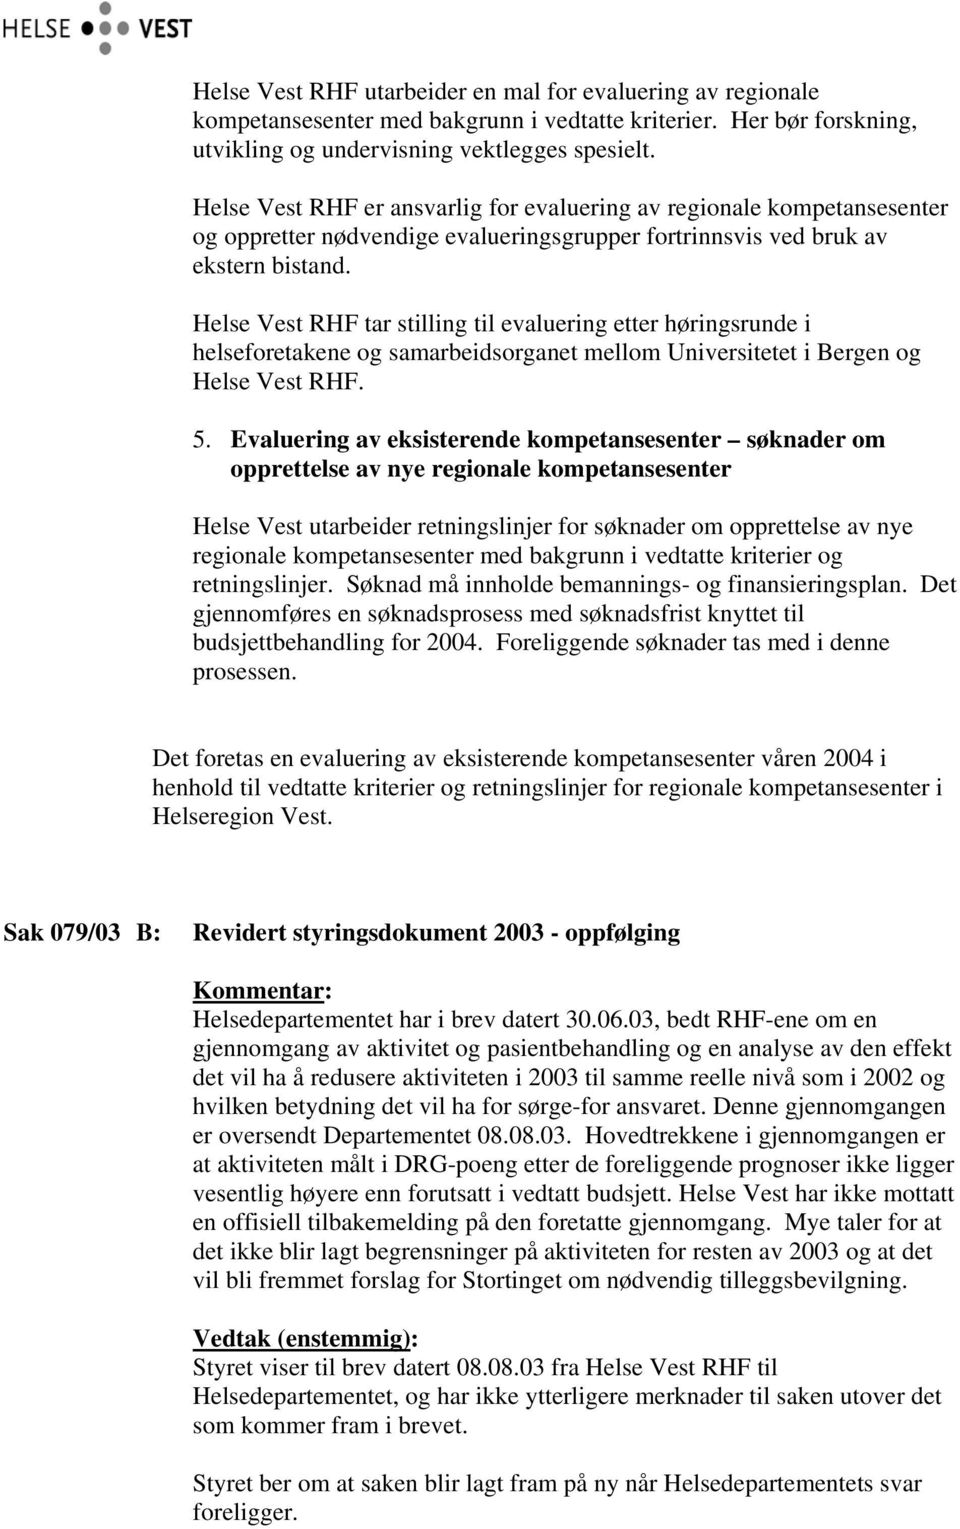 Helse Vest RHF tar stilling til evaluering etter høringsrunde i helseforetakene og samarbeidsorganet mellom Universitetet i Bergen og Helse Vest RHF. 5.